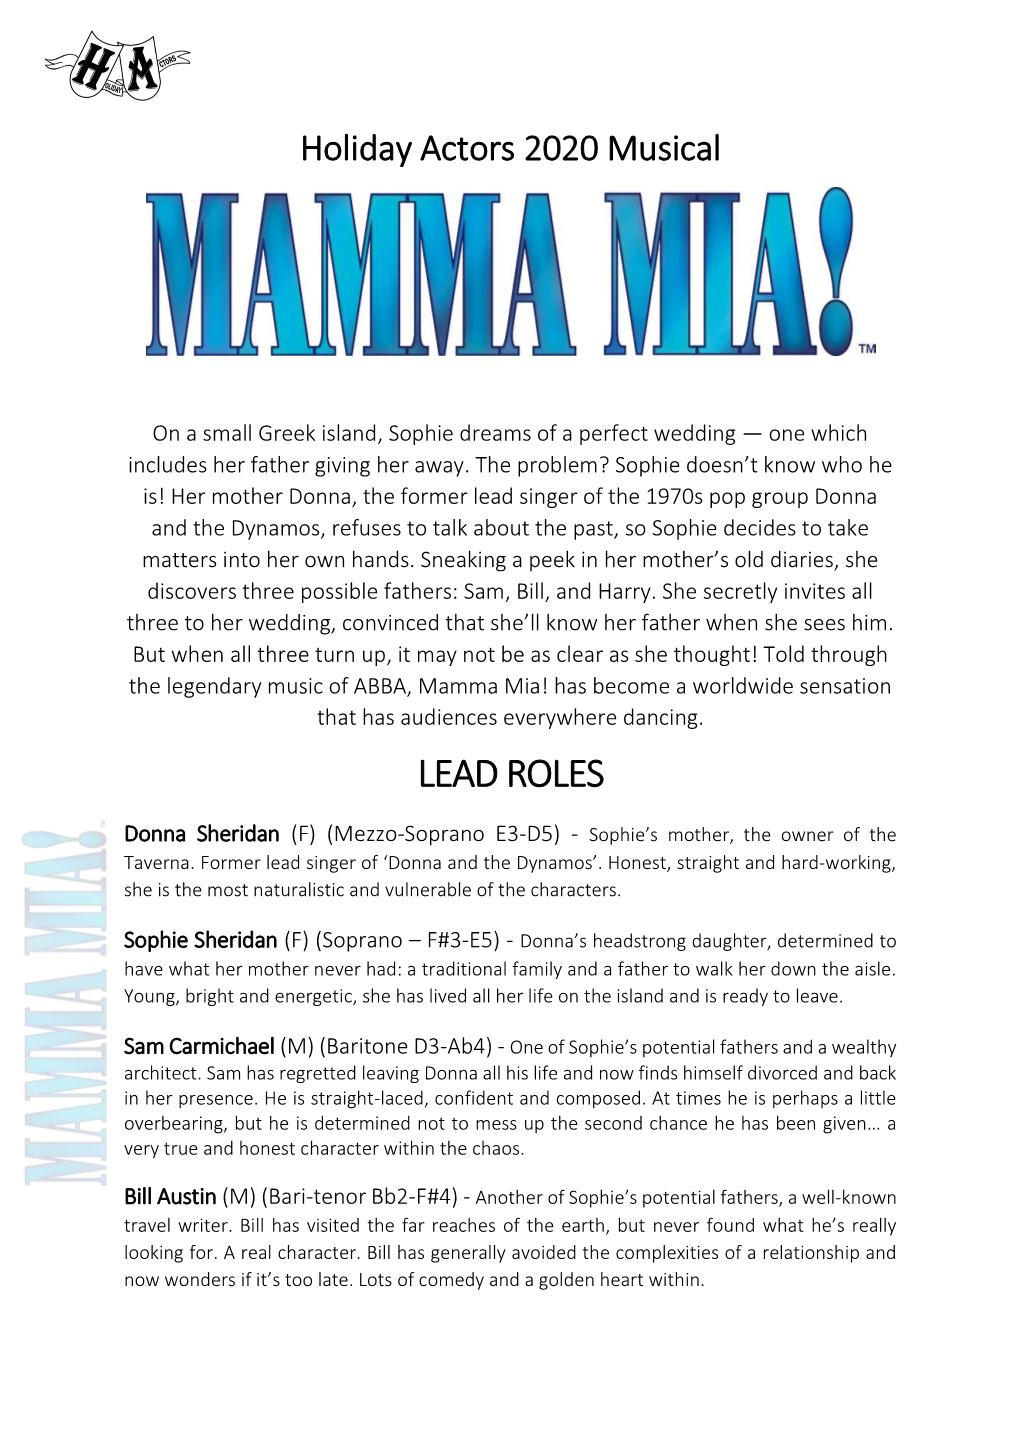 Mamma Mia Info Pack